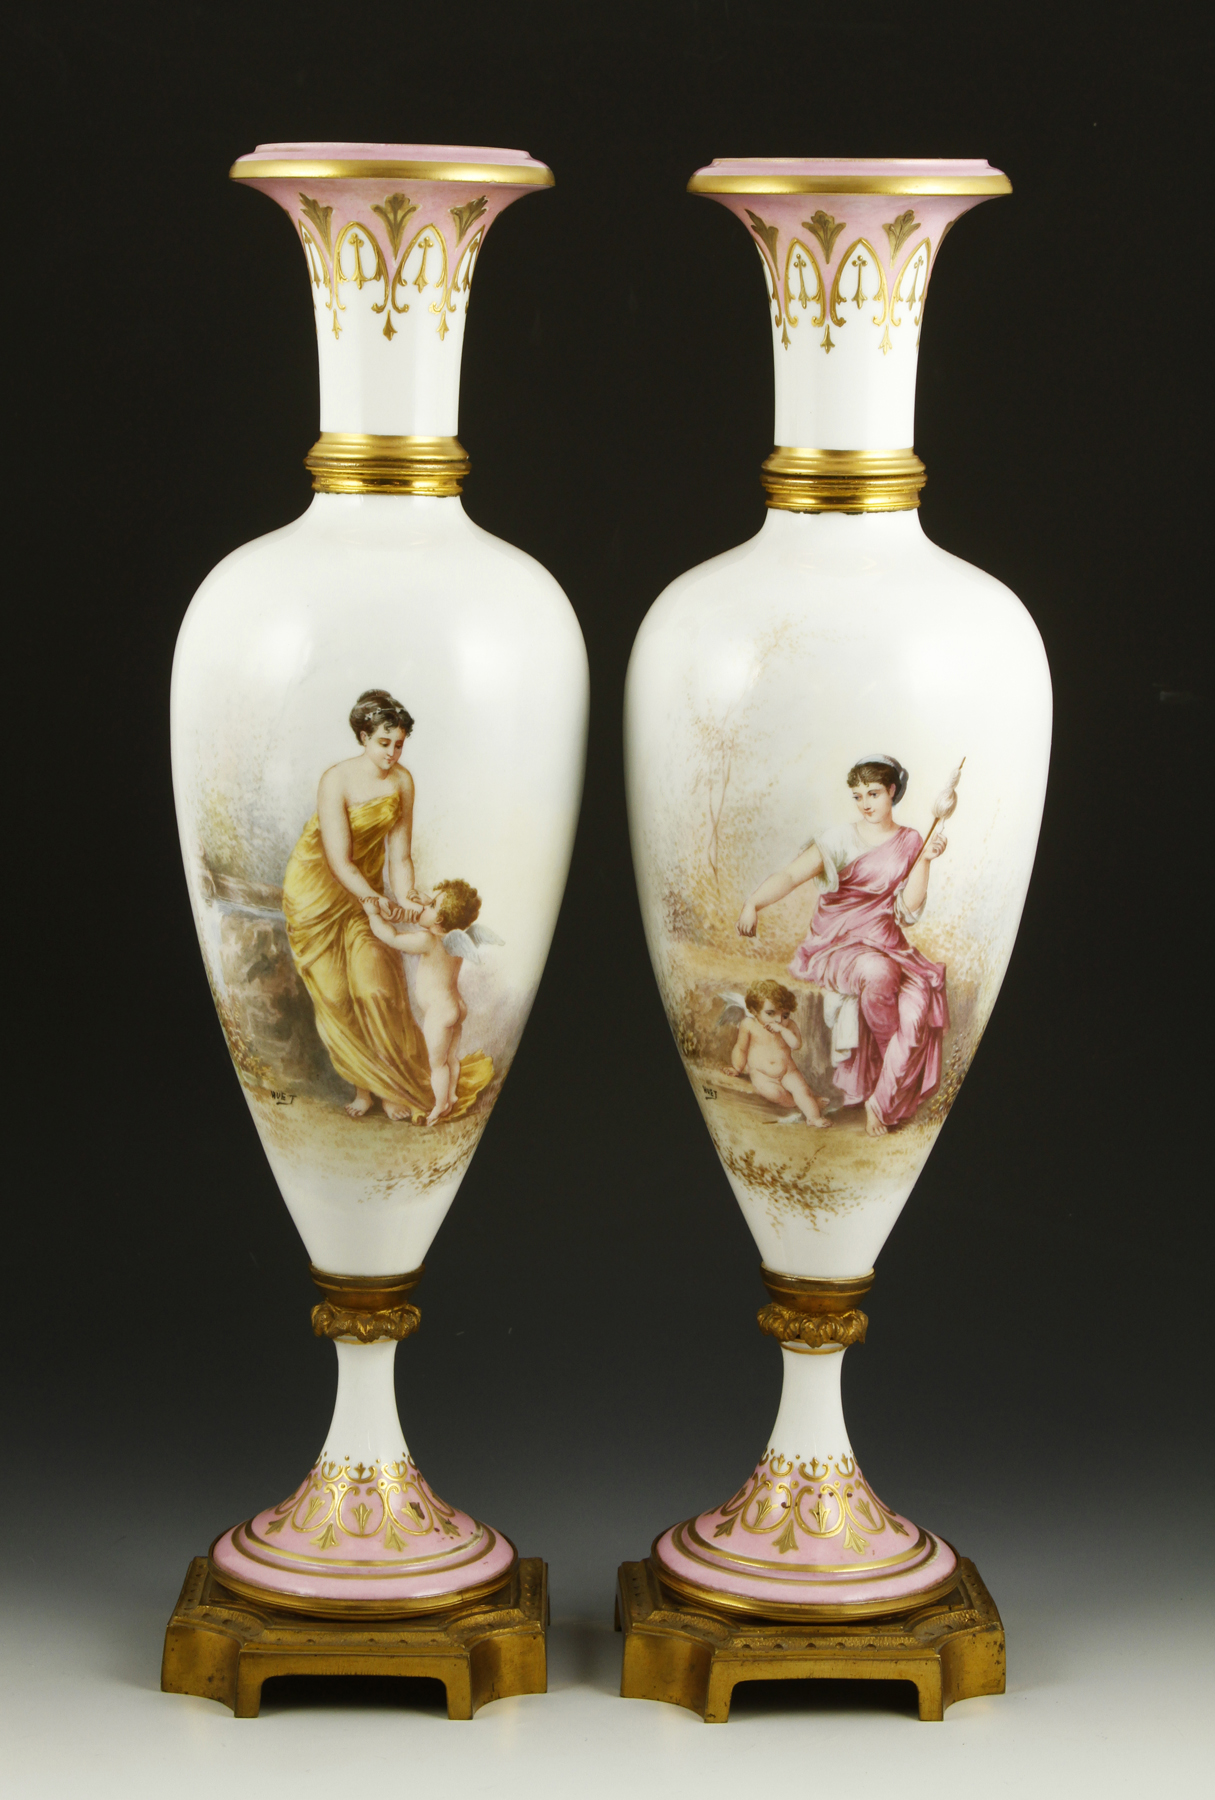 Pair of hand painted Sevres vases, porcelain, each artist signed "Huet," bronze mounts, 18" high